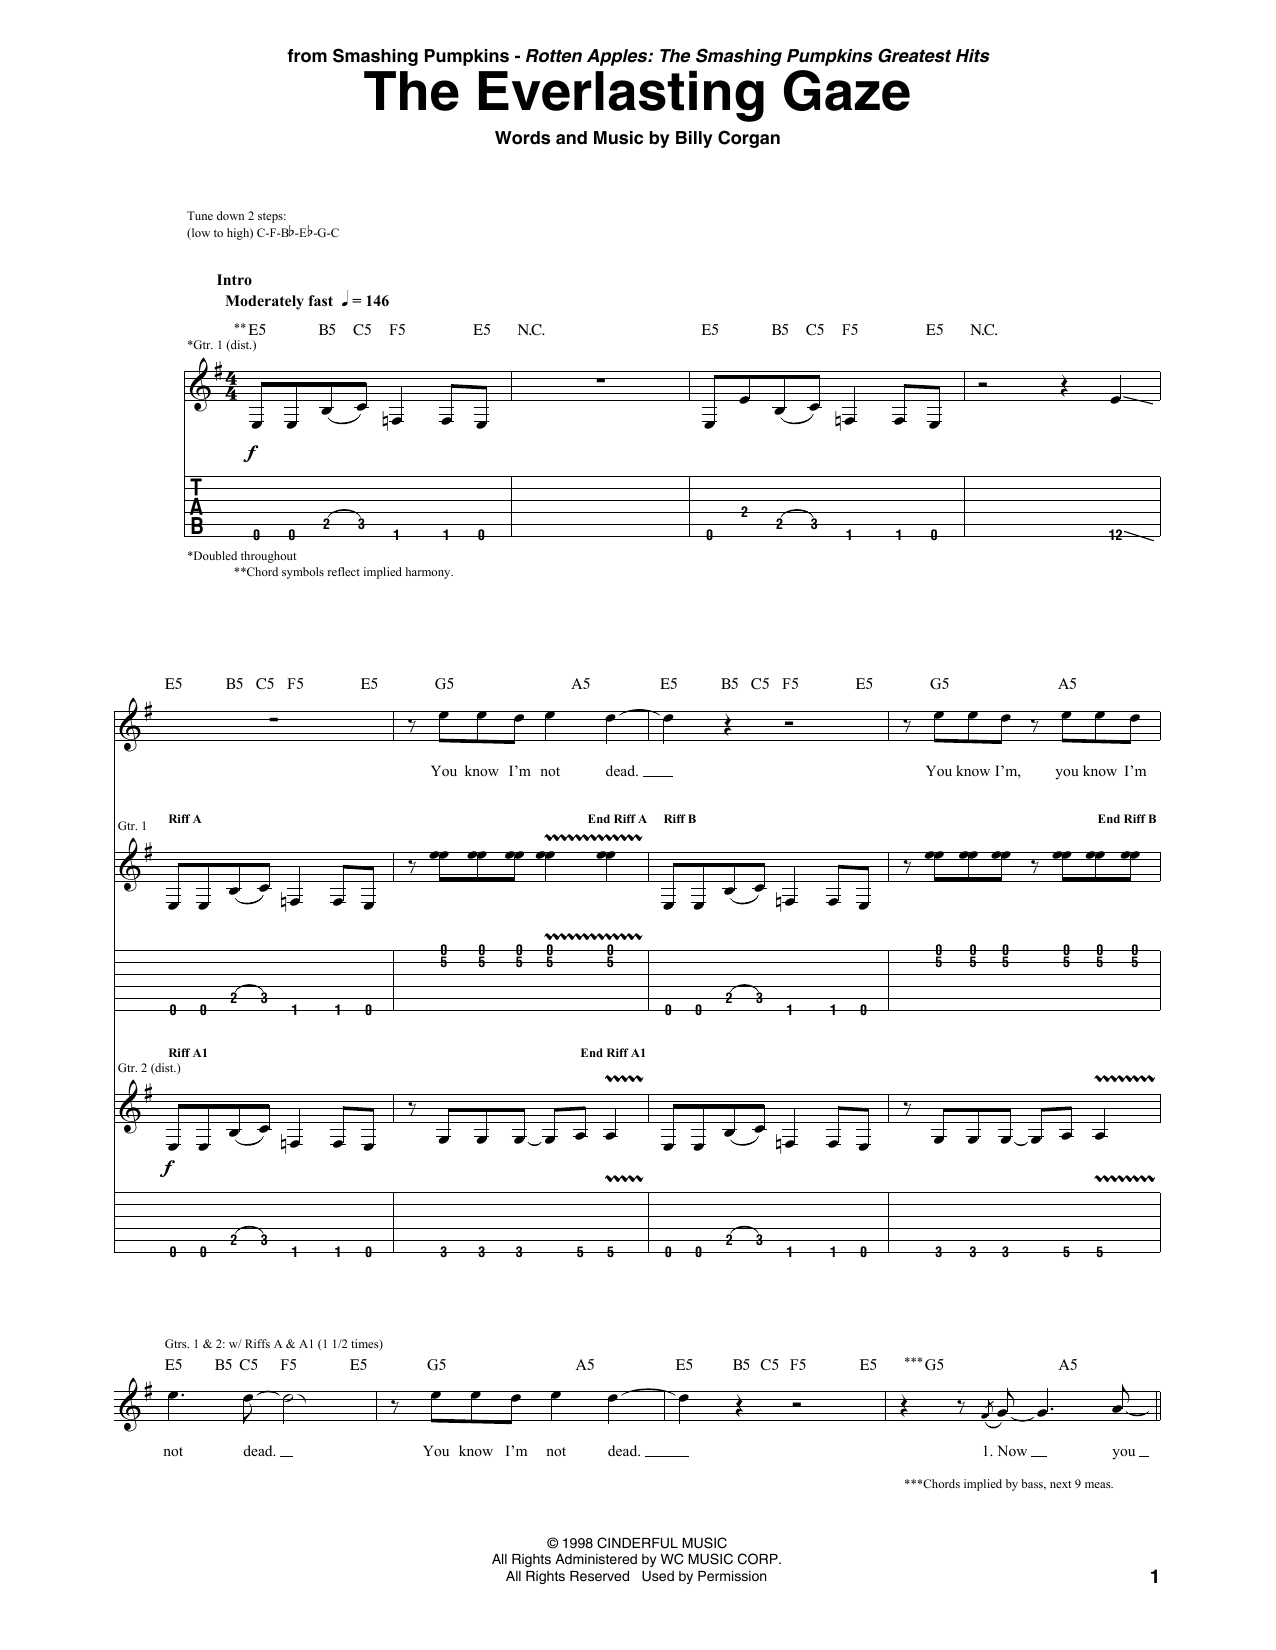 The Smashing Pumpkins The Everlasting Gaze Sheet Music Notes & Chords for Guitar Tab - Download or Print PDF